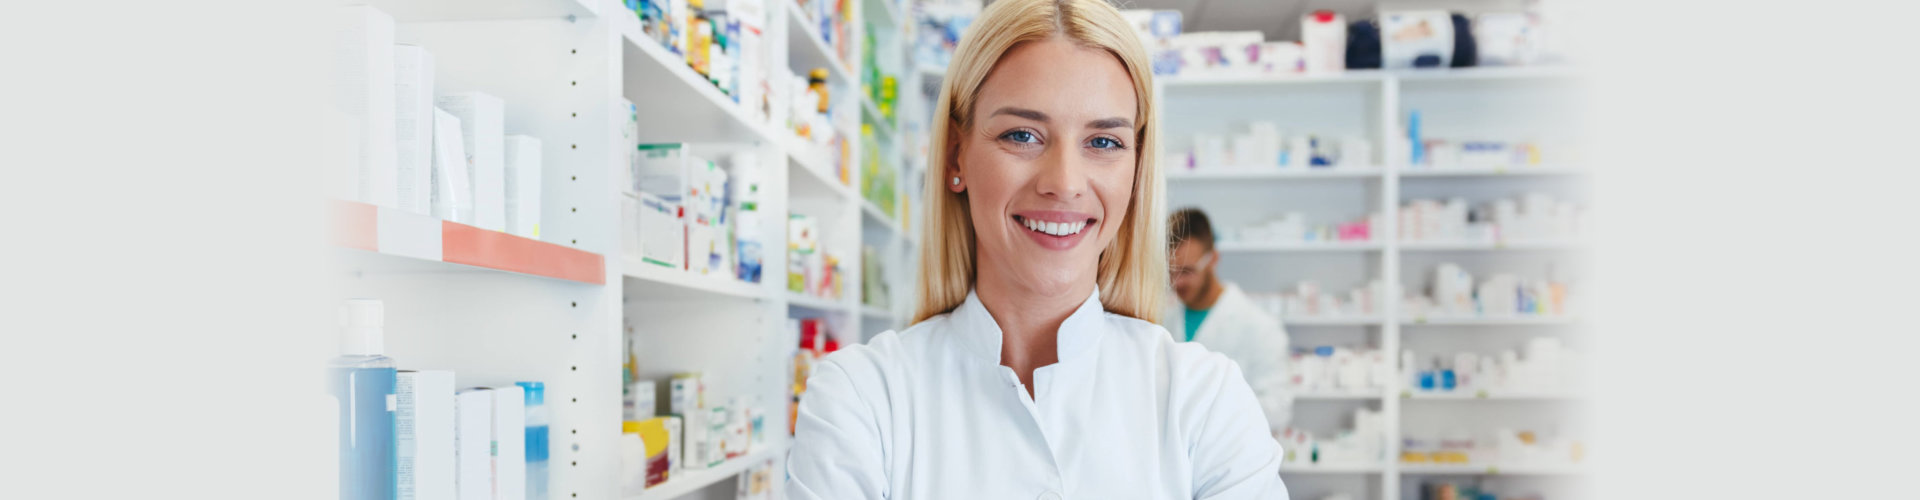 smiling pharmacist chemist woman